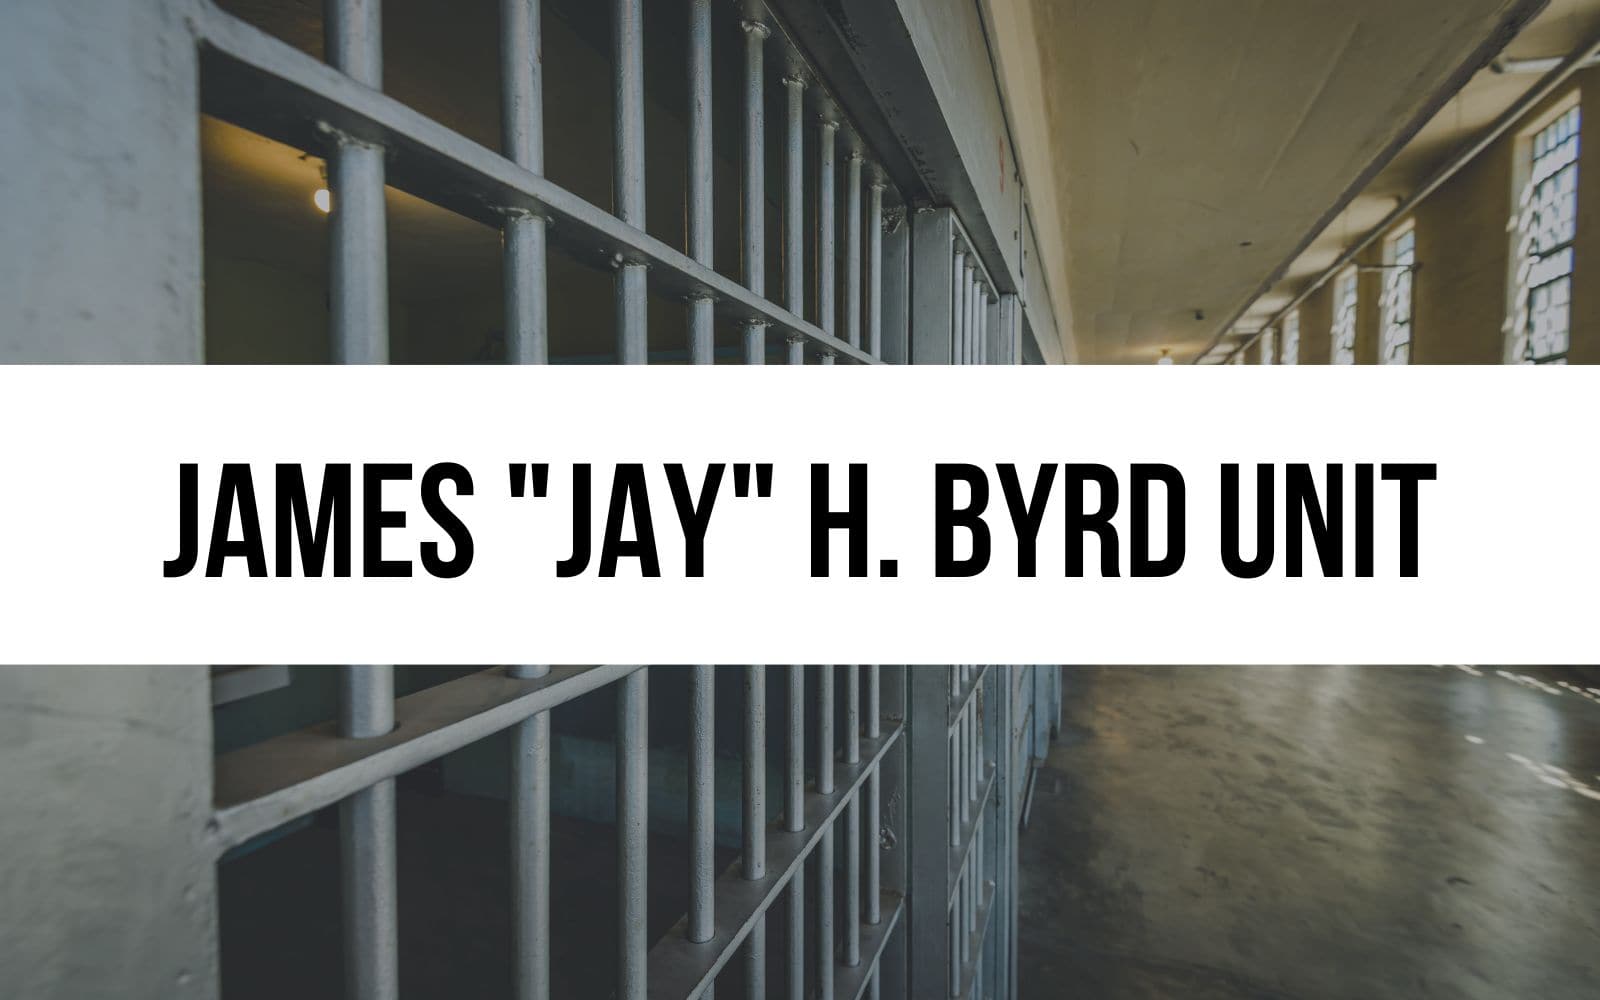 James Jay H. Byrd Unit